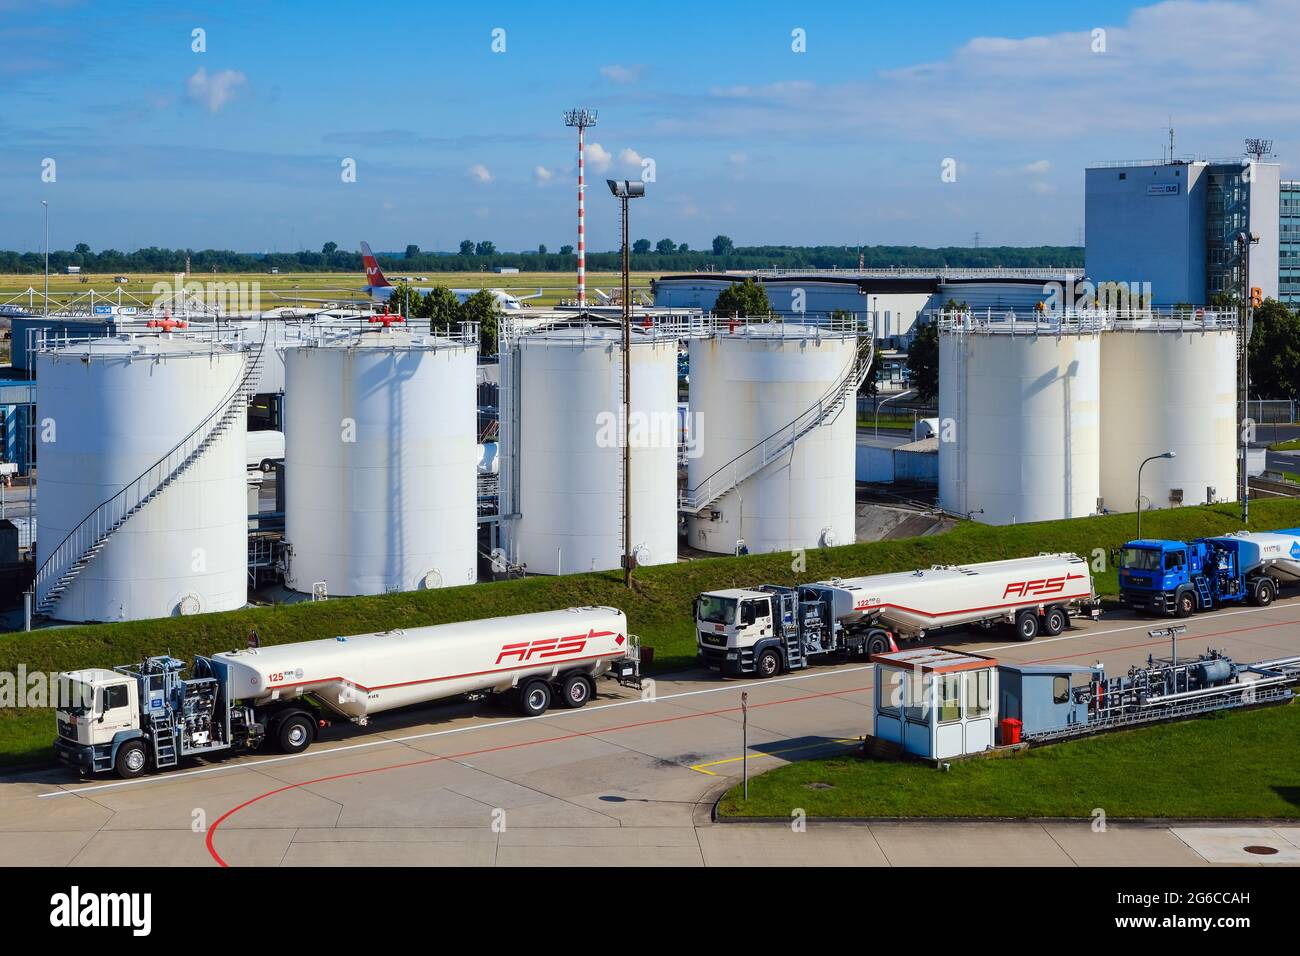 Duesseldorf, North Rhine-Westphalia, Germany - aviation fuel storage tanks at Duesseldorf airport, aircraft fueling and aviation fuel storage by AFS A Stock Photo